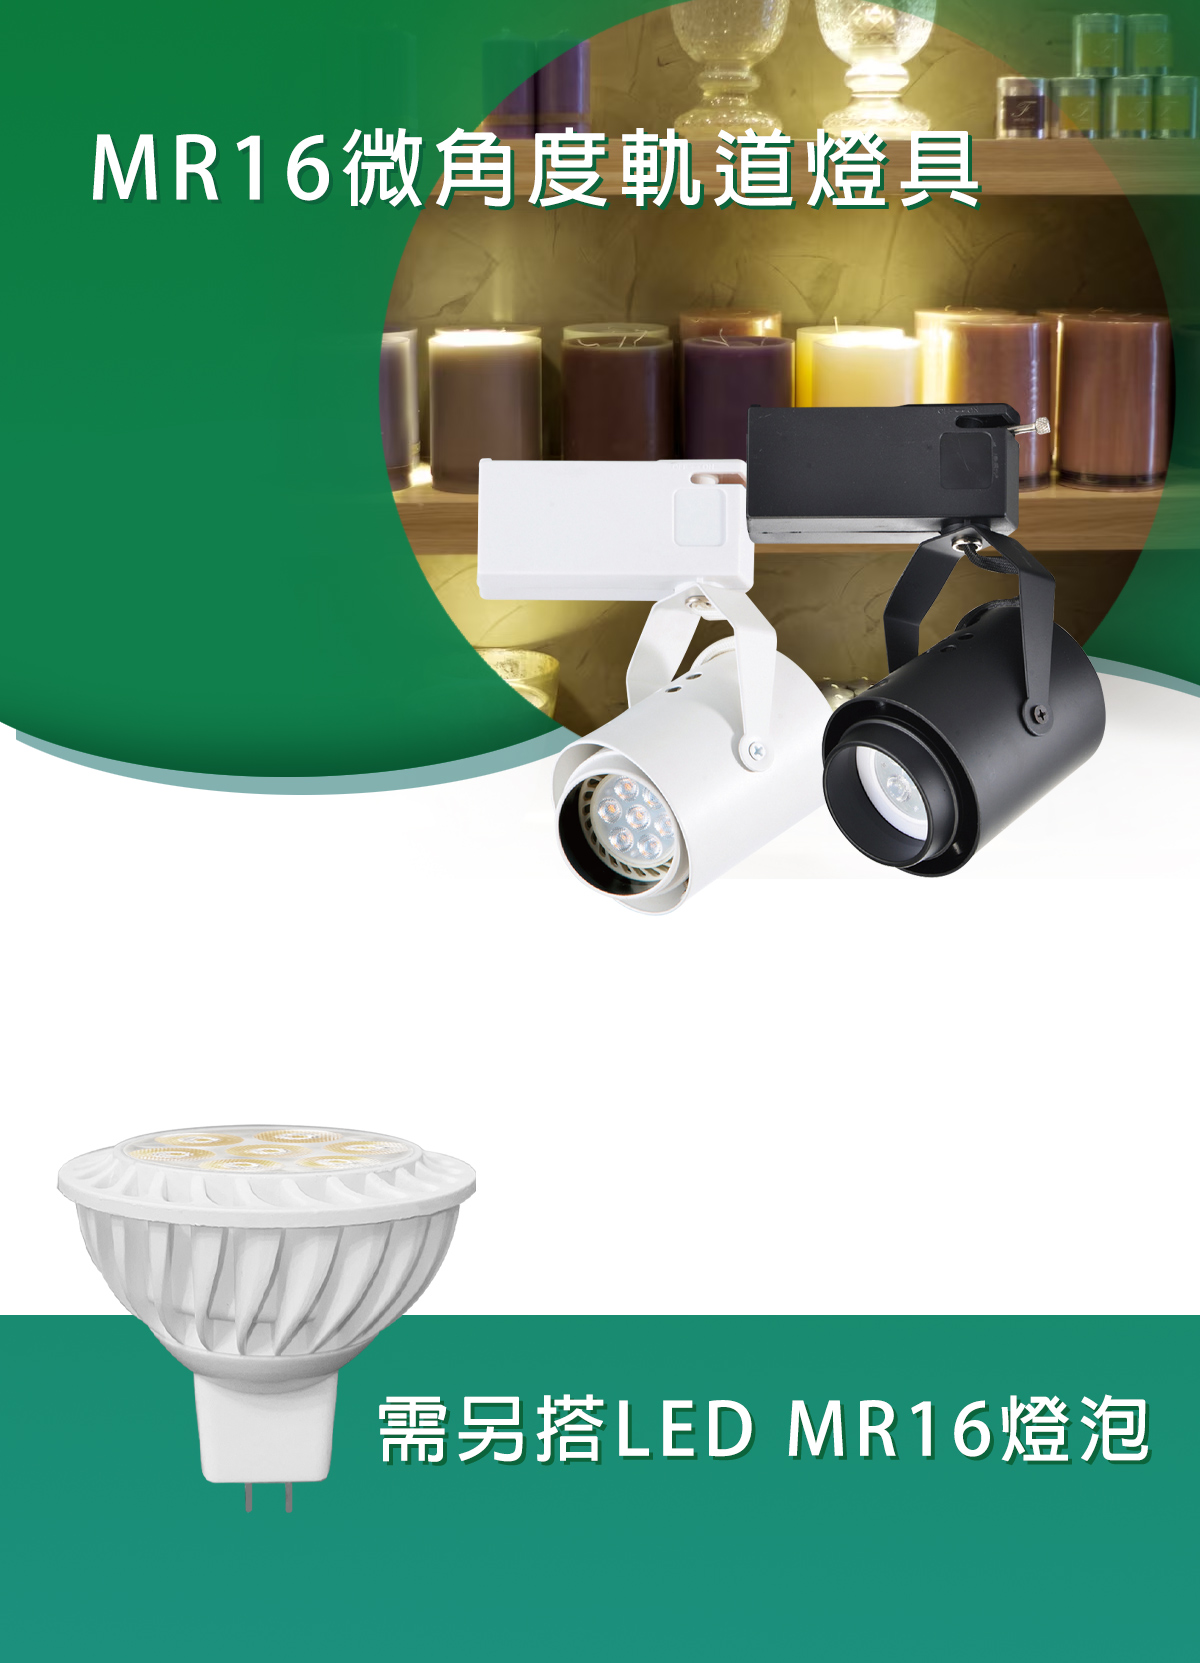 【KAO'S】LED MR16微角度軌道燈 黑殼/白殼 可替換燈泡 MR16杯燈另計